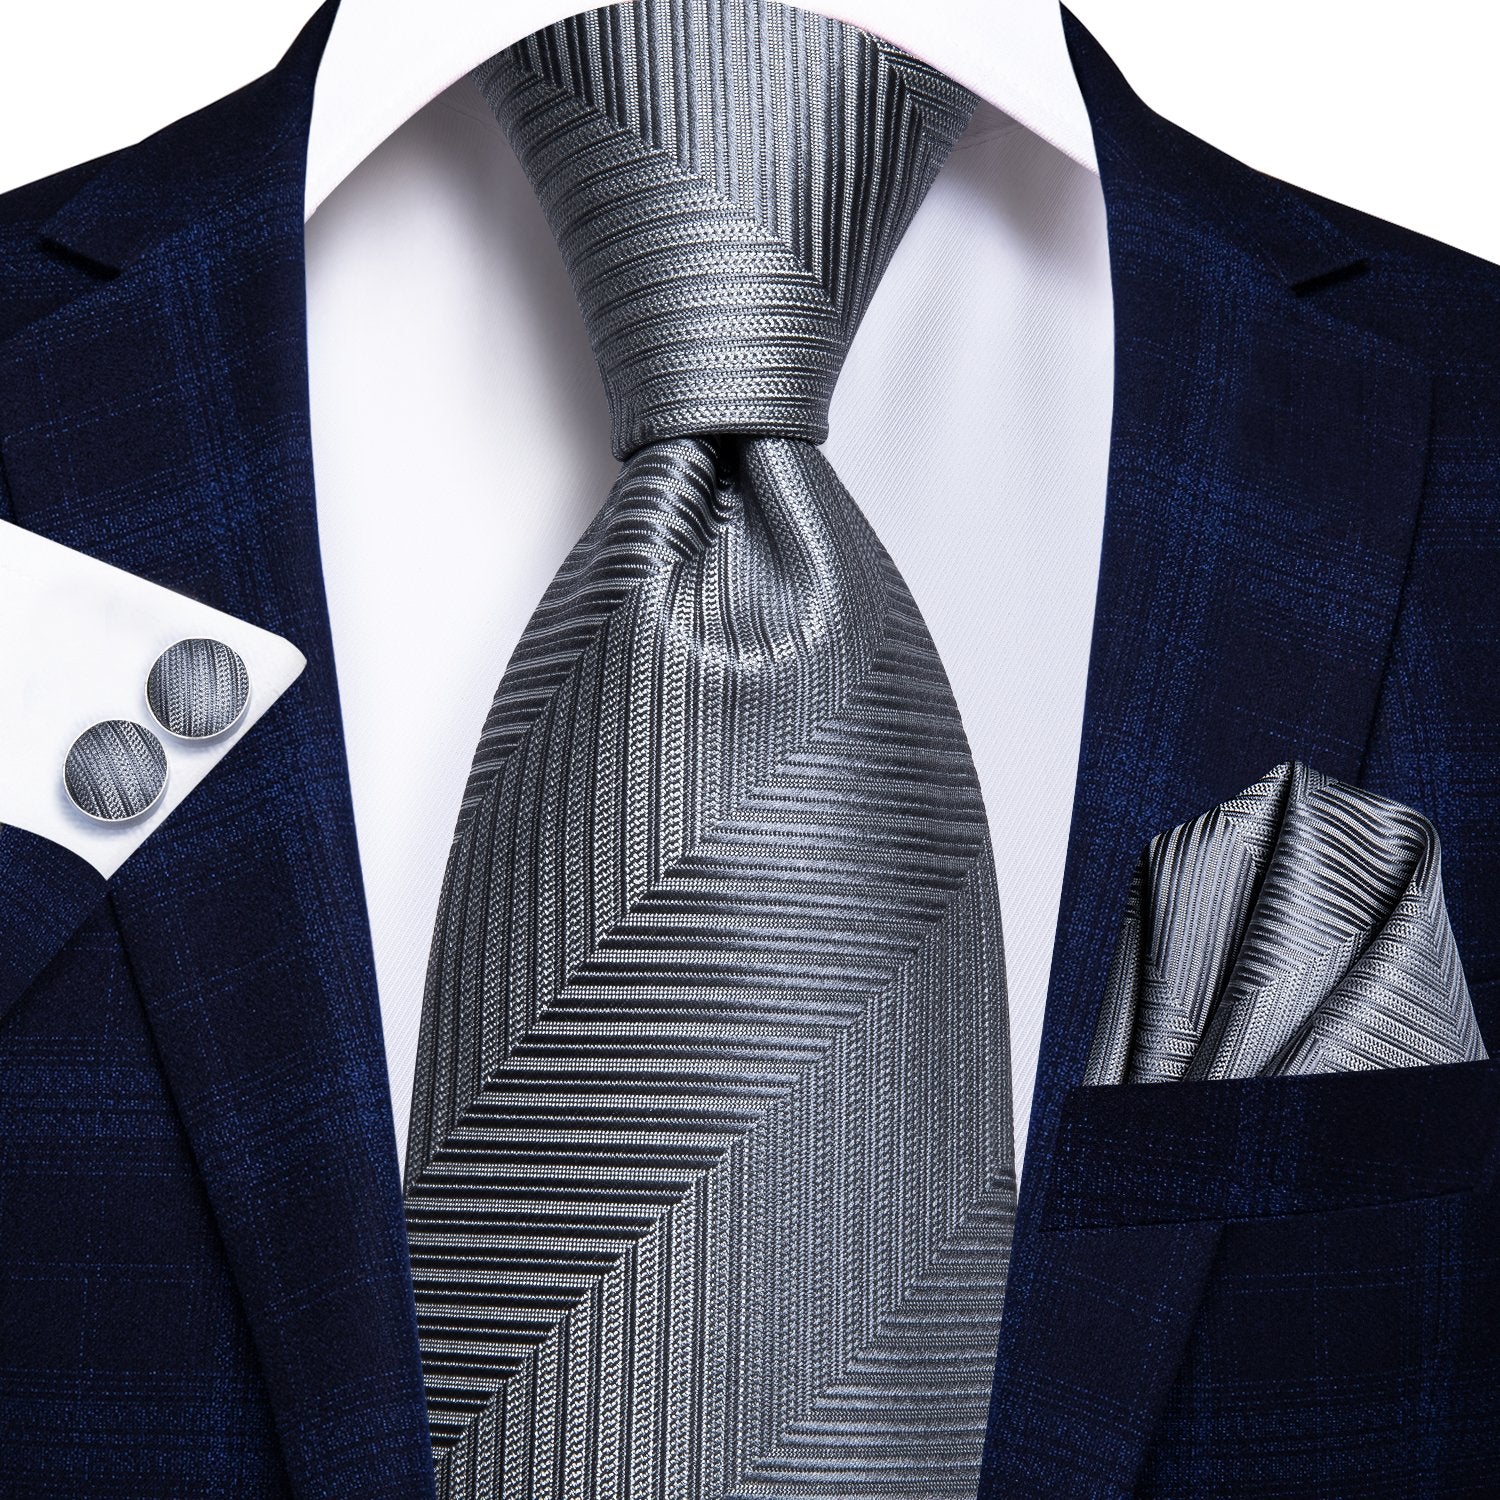 Essential Grey Striped Tie Handkerchief Cufflinks Set with Wedding Brooch